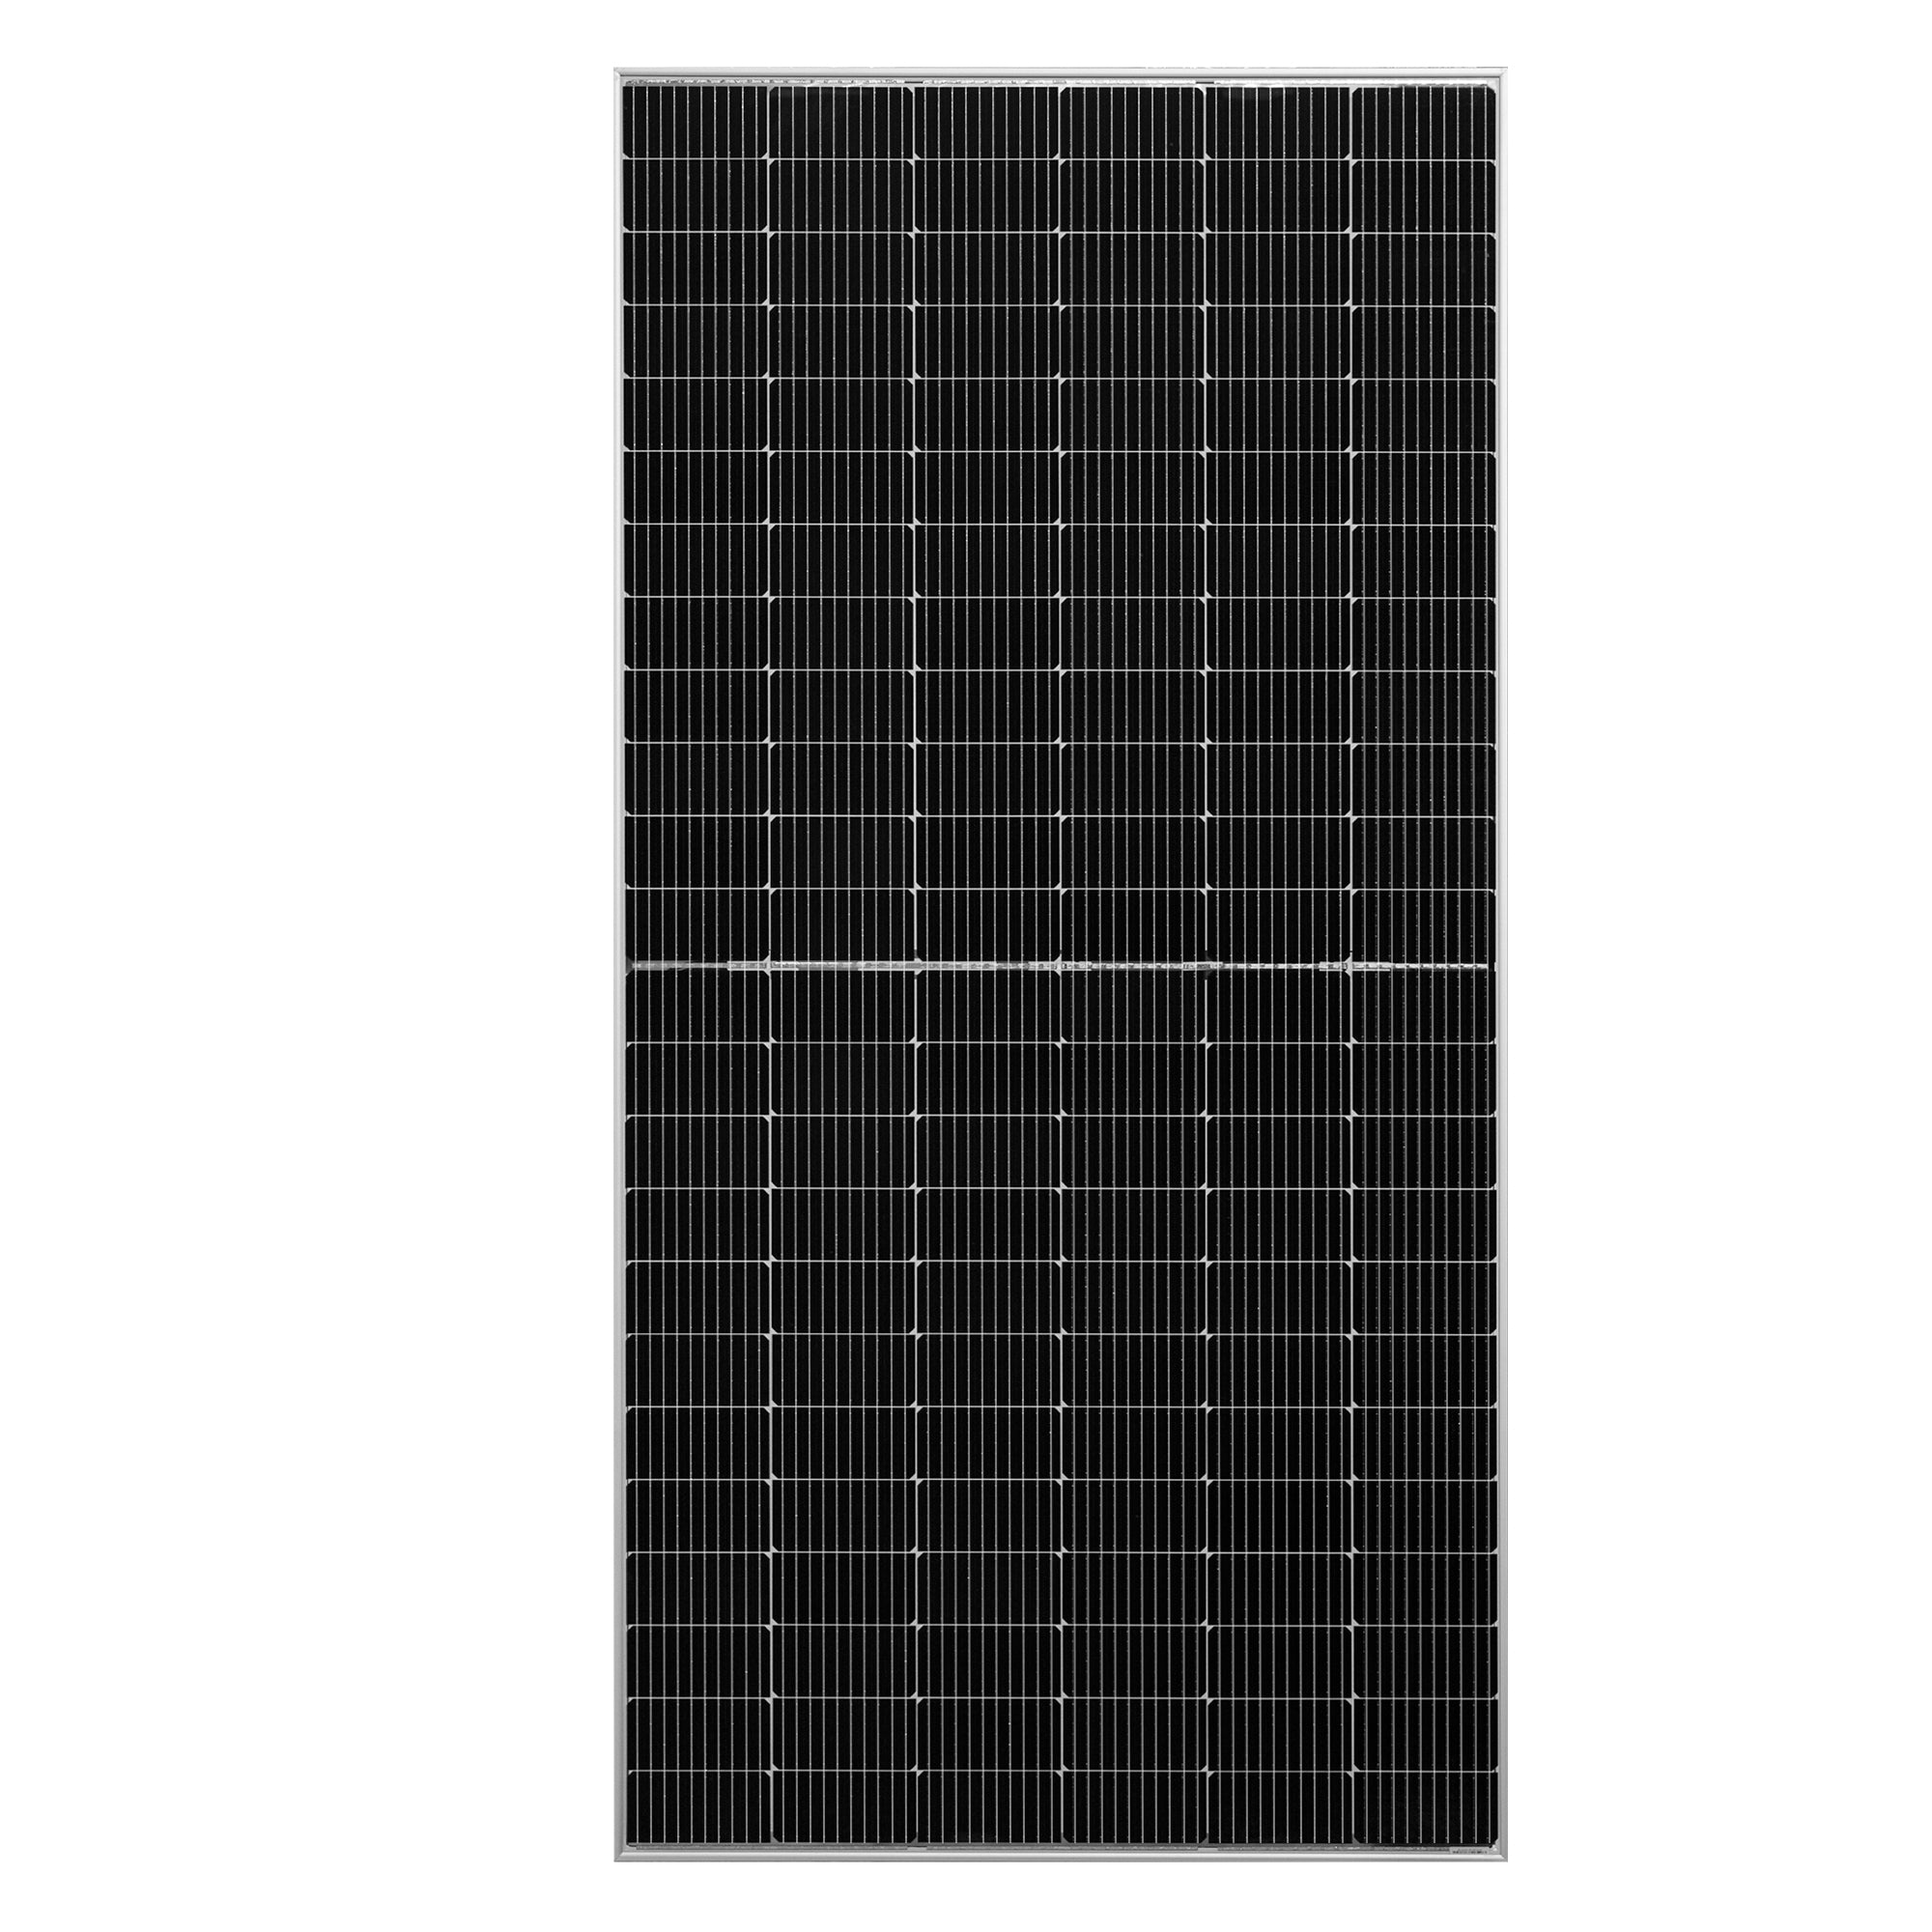 MEGA 550 | 550 Watt Bifacial Solar Panel | High Efficiency | Best Solar Panel for Grid-Tie and Off-Grid | UL Certified